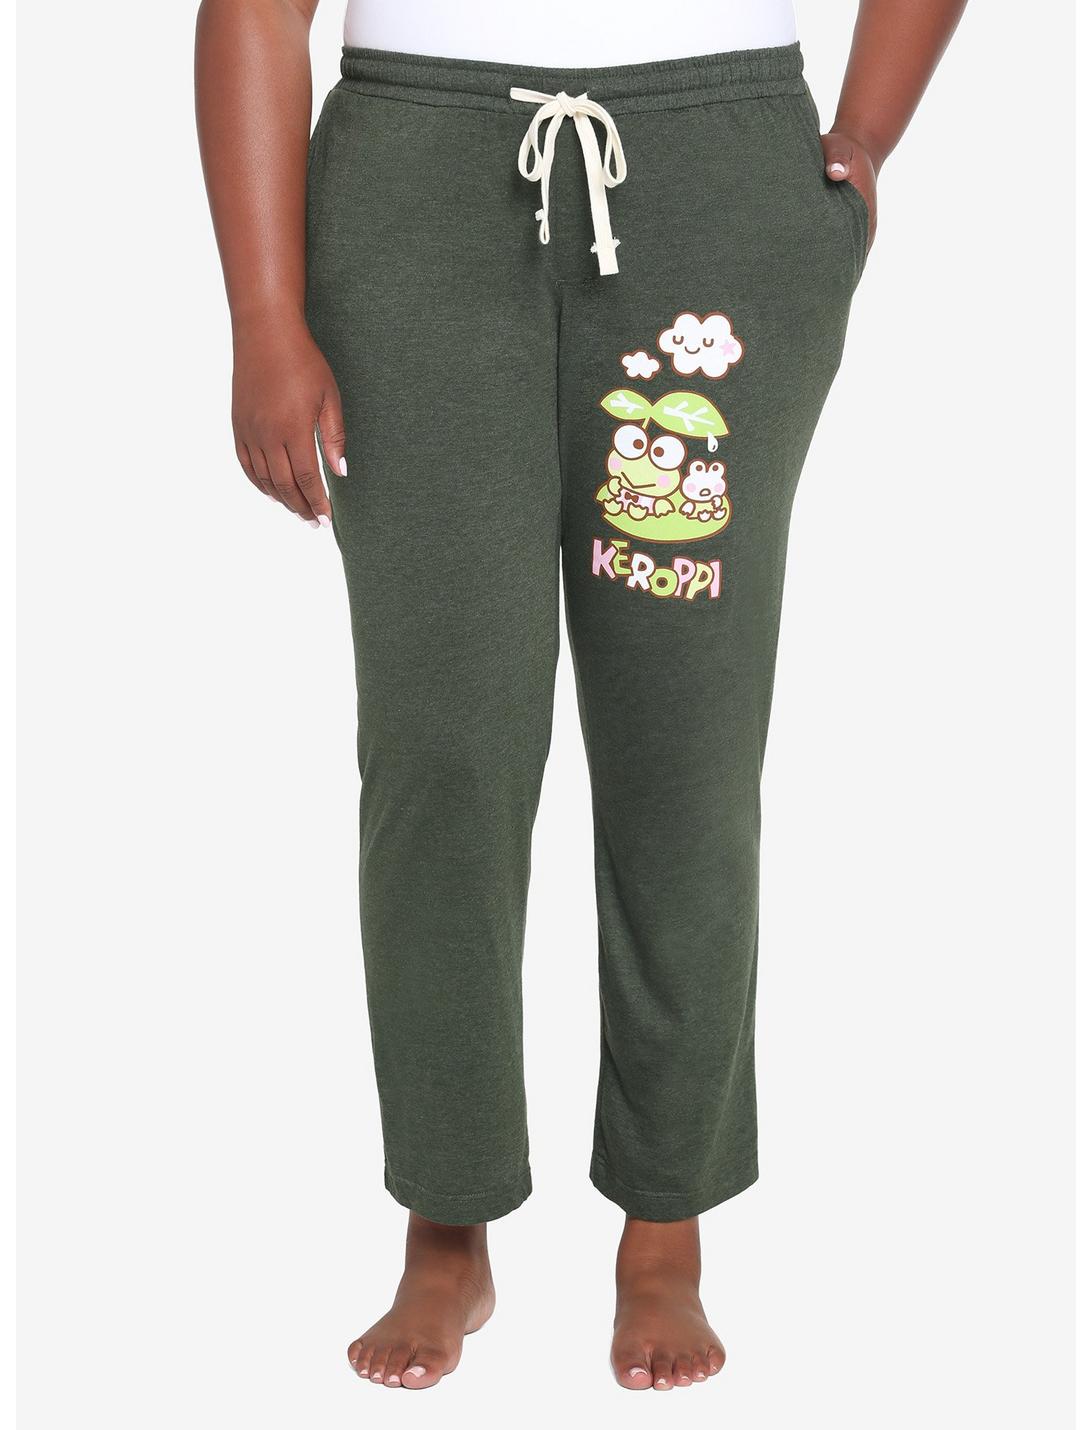 Keroppi Clouds Green Pajama Pants Plus Size, OLIVE, hi-res